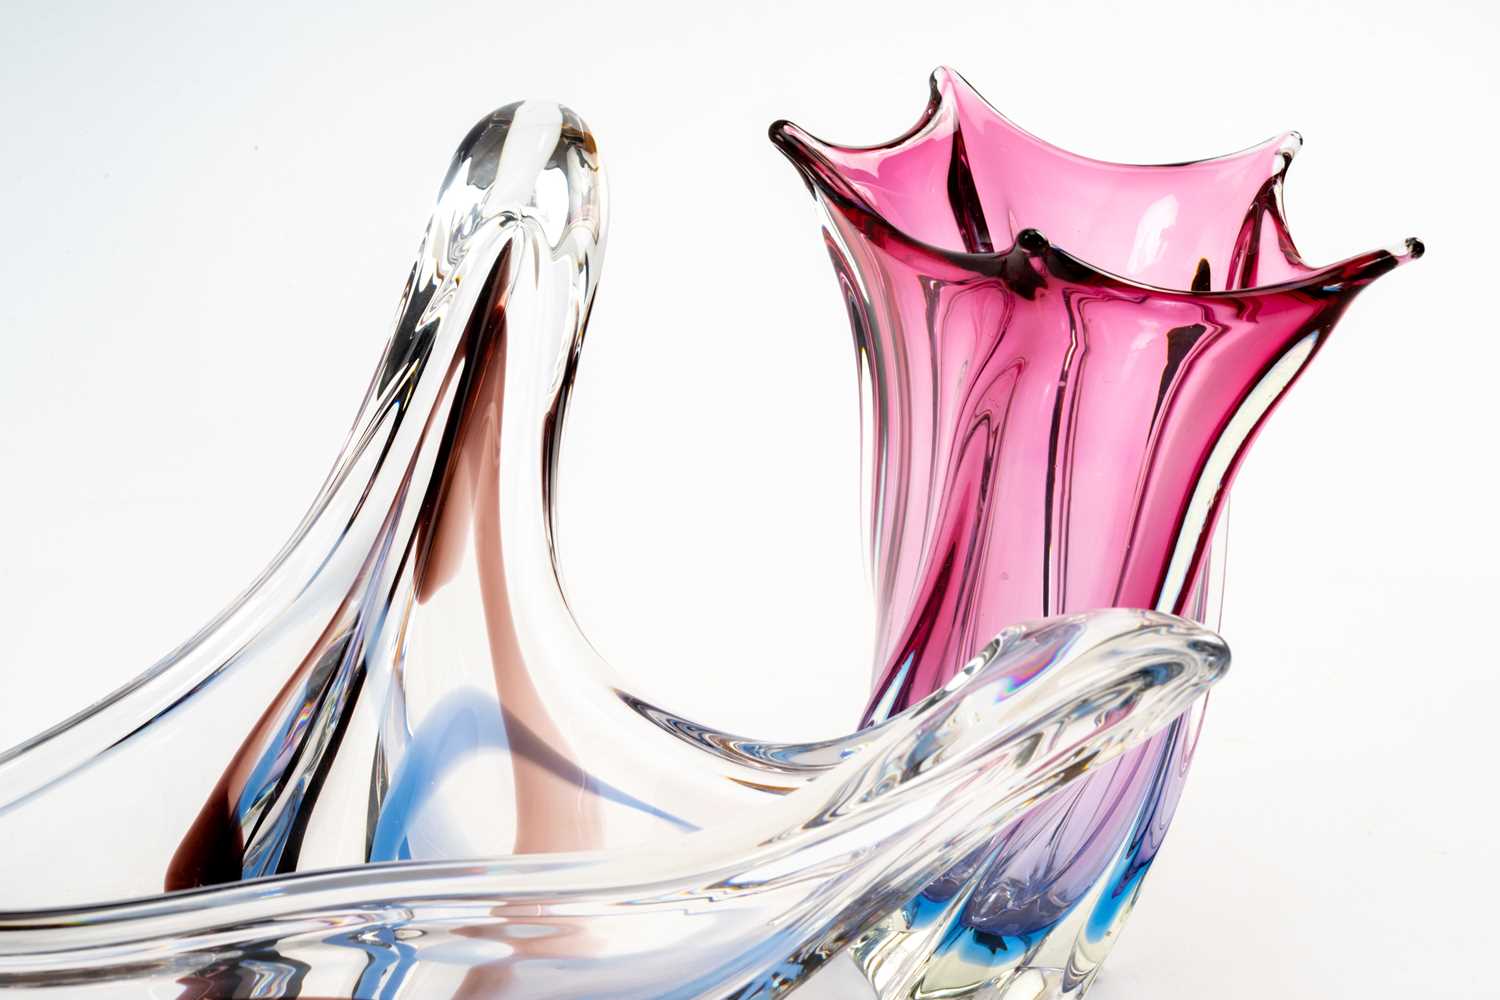 STUDIO GLASS & BOHEMIAN FLASKS, comprising MAX VERBOEKET FOR KRISTALUNIE MAASTRICT studio glass - Image 3 of 5